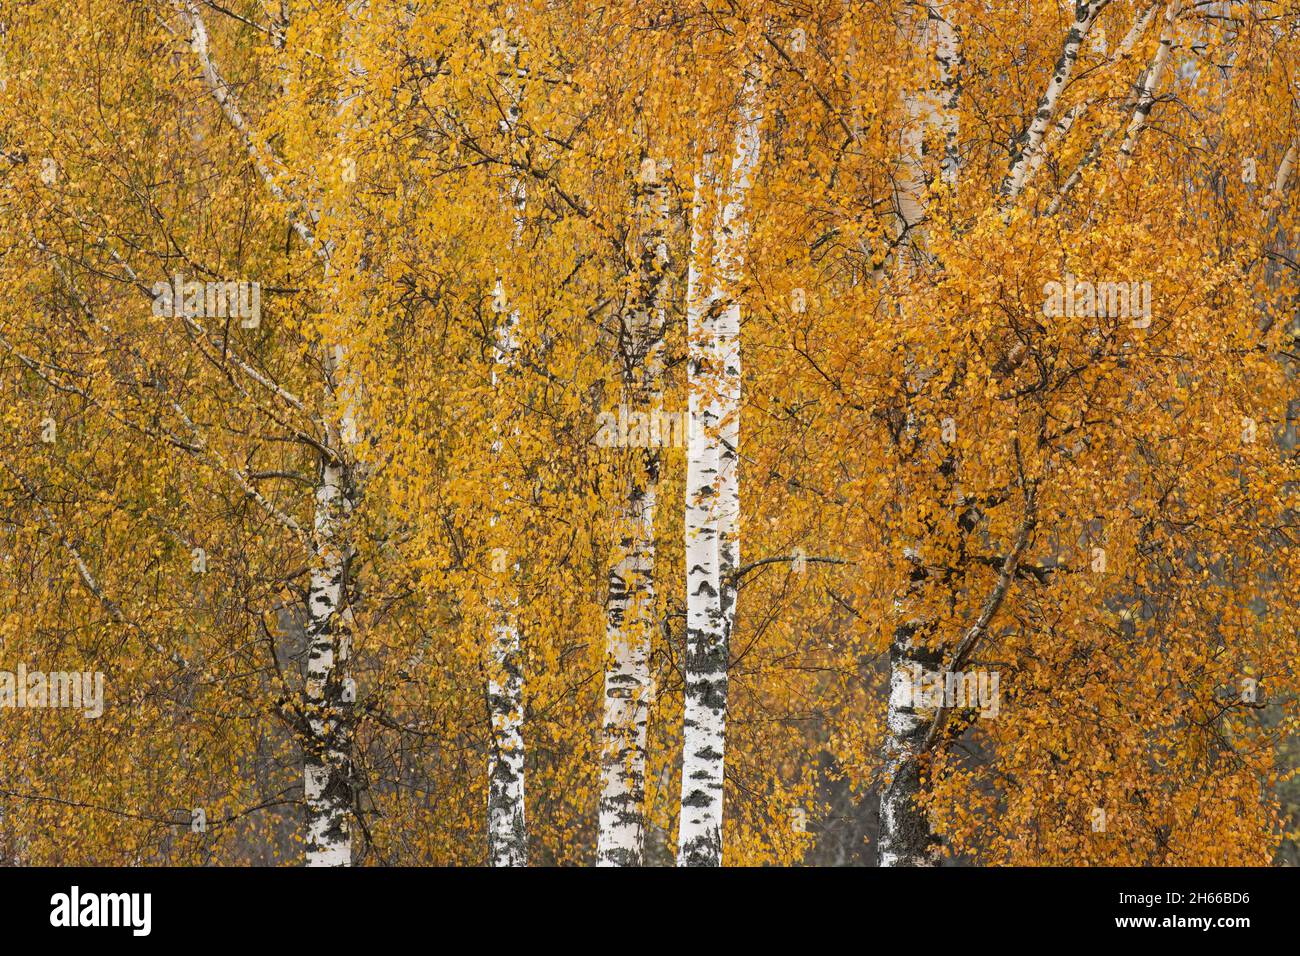 Lush Silver birch, Betula pendula trees during autumn foliage in Estonia. Stock Photo